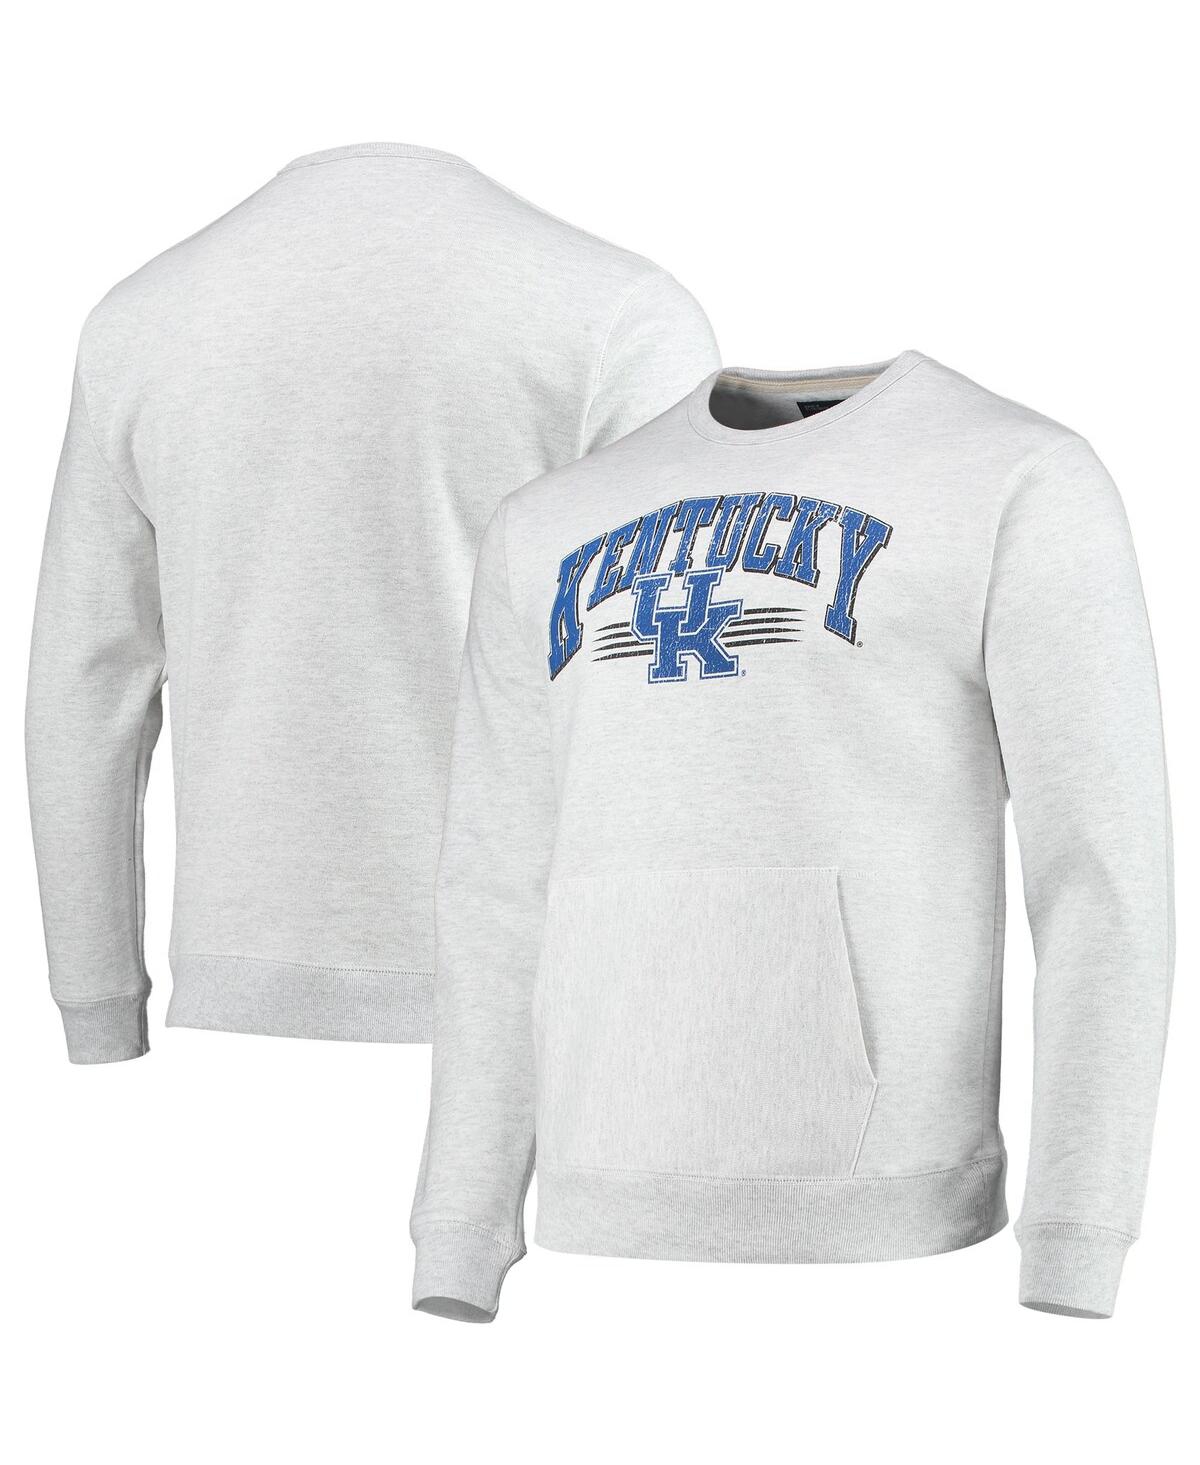 Men's League Collegiate Wear Heathered Gray Distressed Kentucky Wildcats Upperclassman Pocket Pullover Sweatshirt - Heathered Gray